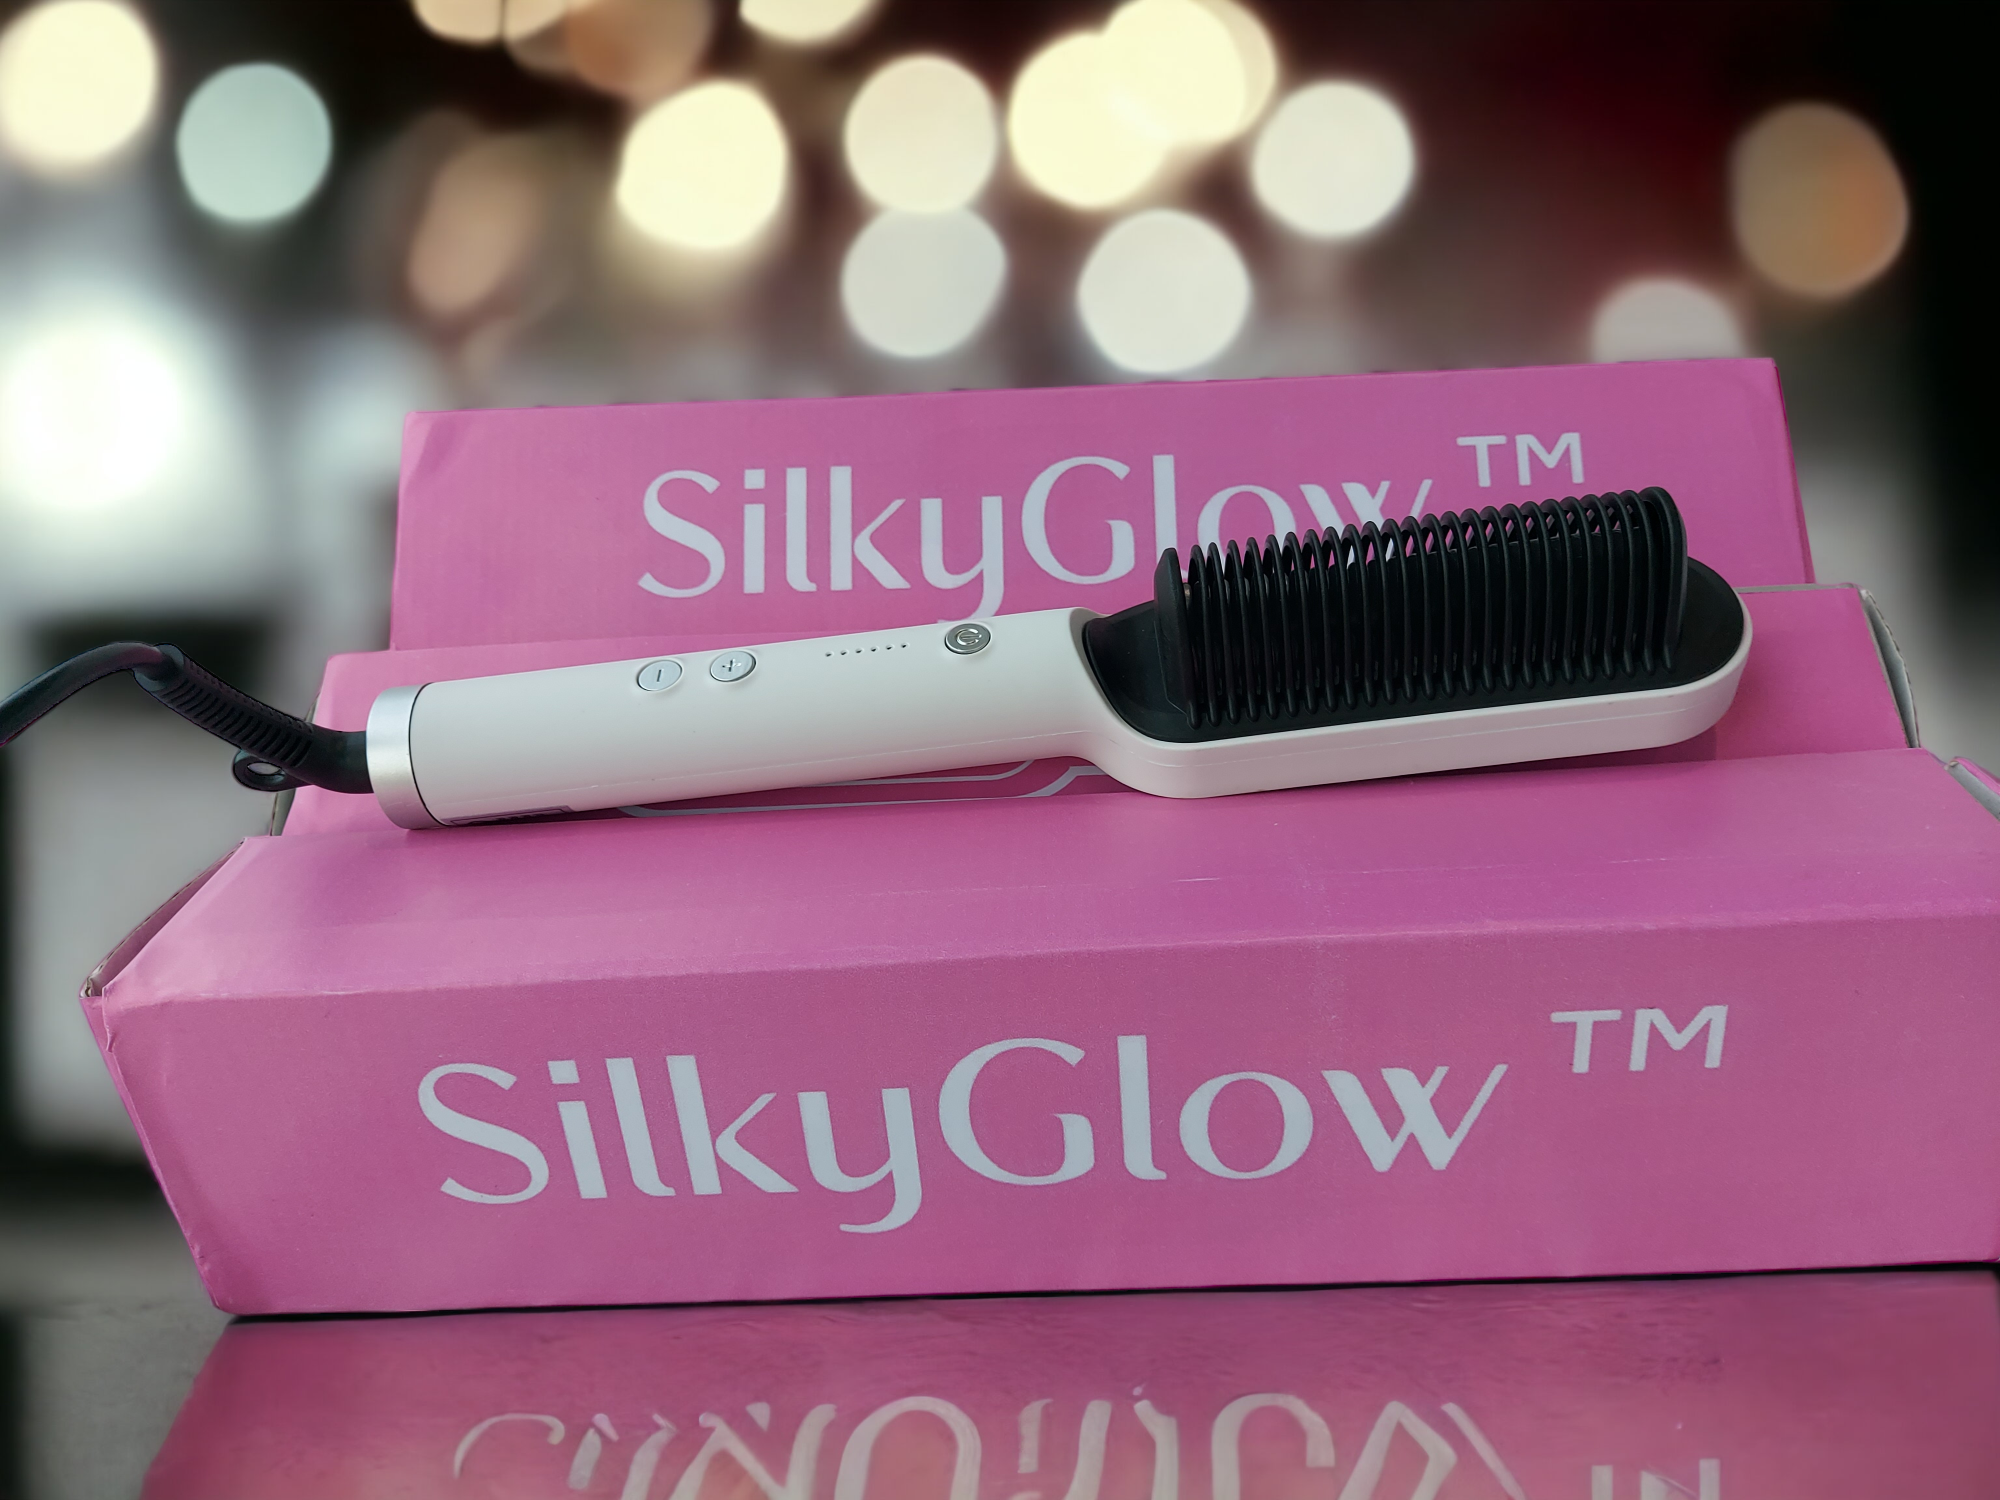 SilkyGlow™ Magic Comb